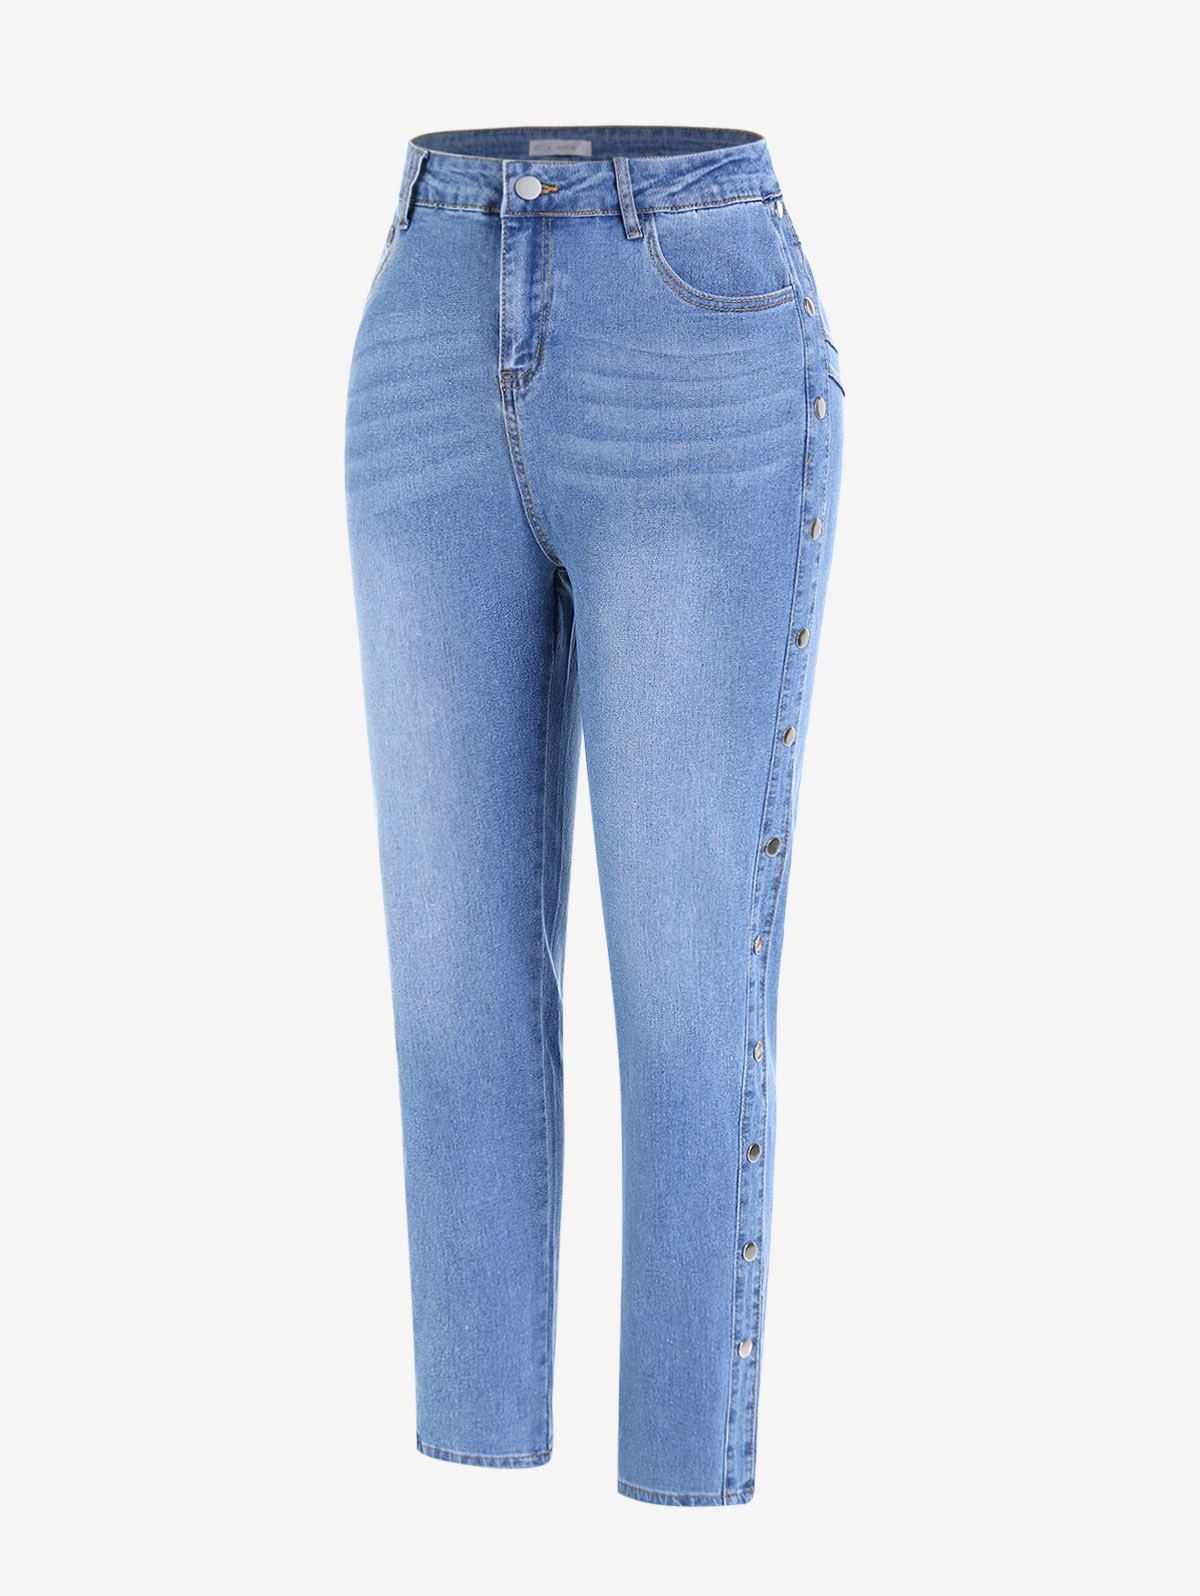 Plus Size Studded Light Wash Skinny Jeans - BLUE 5X